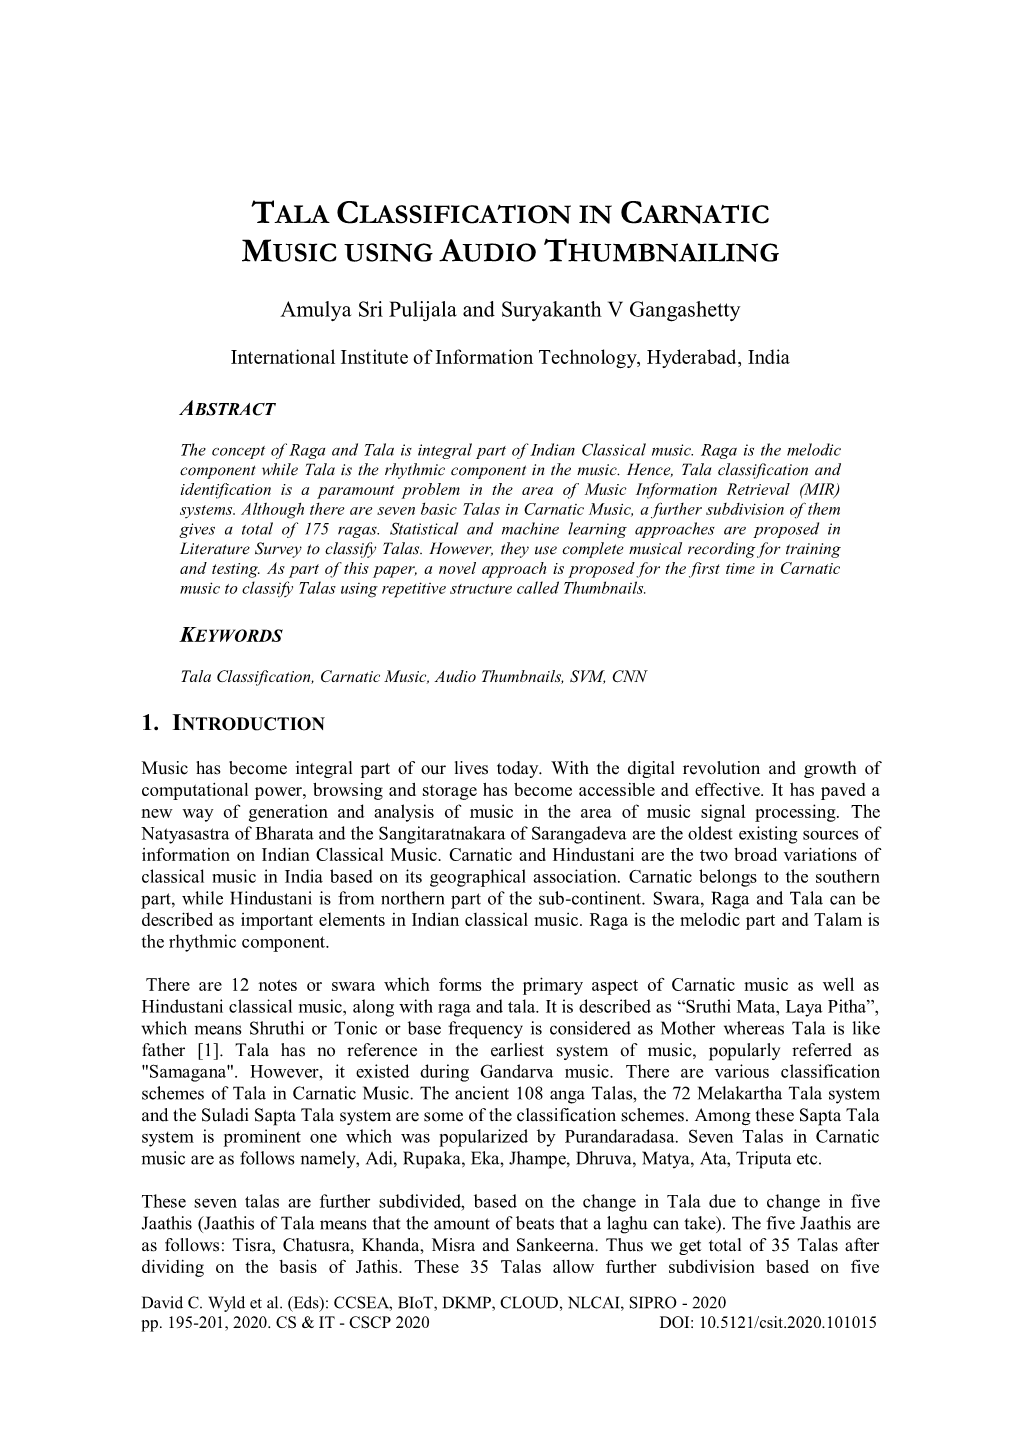 Tala Classification in Carnatic Music Using Audio Thumbnailing